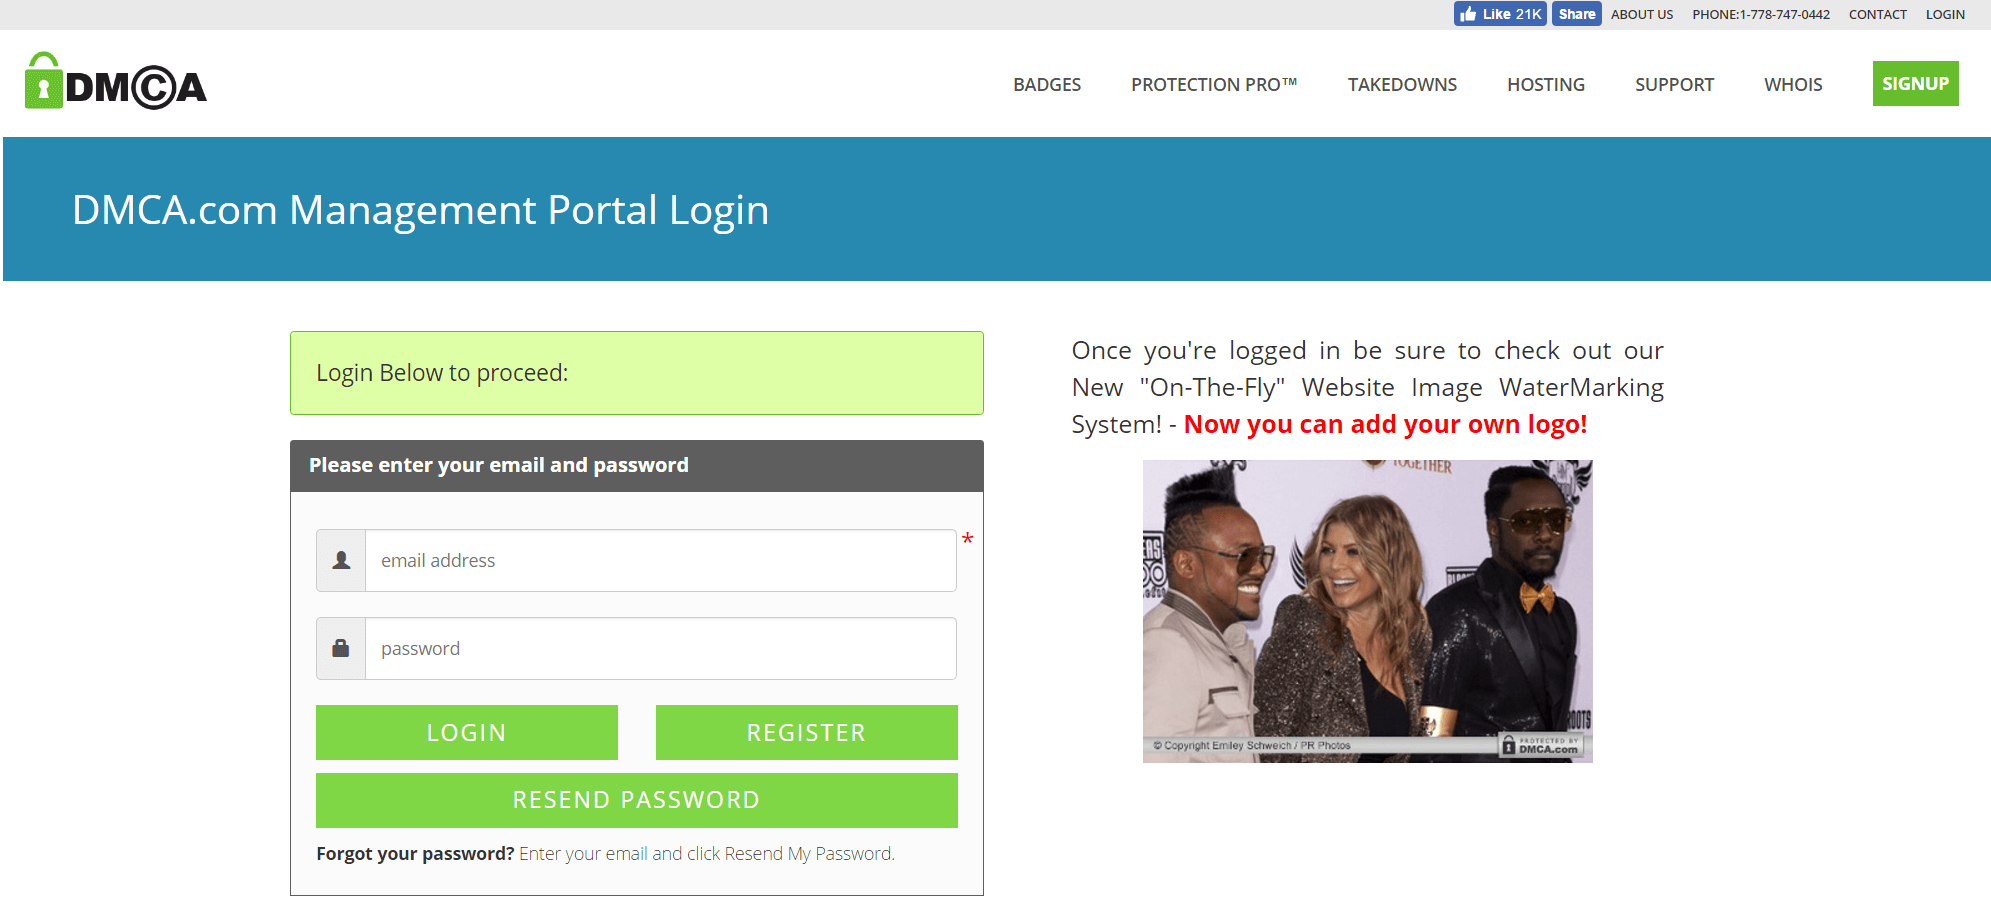 Login to the DMCA.com Client Services Portal.